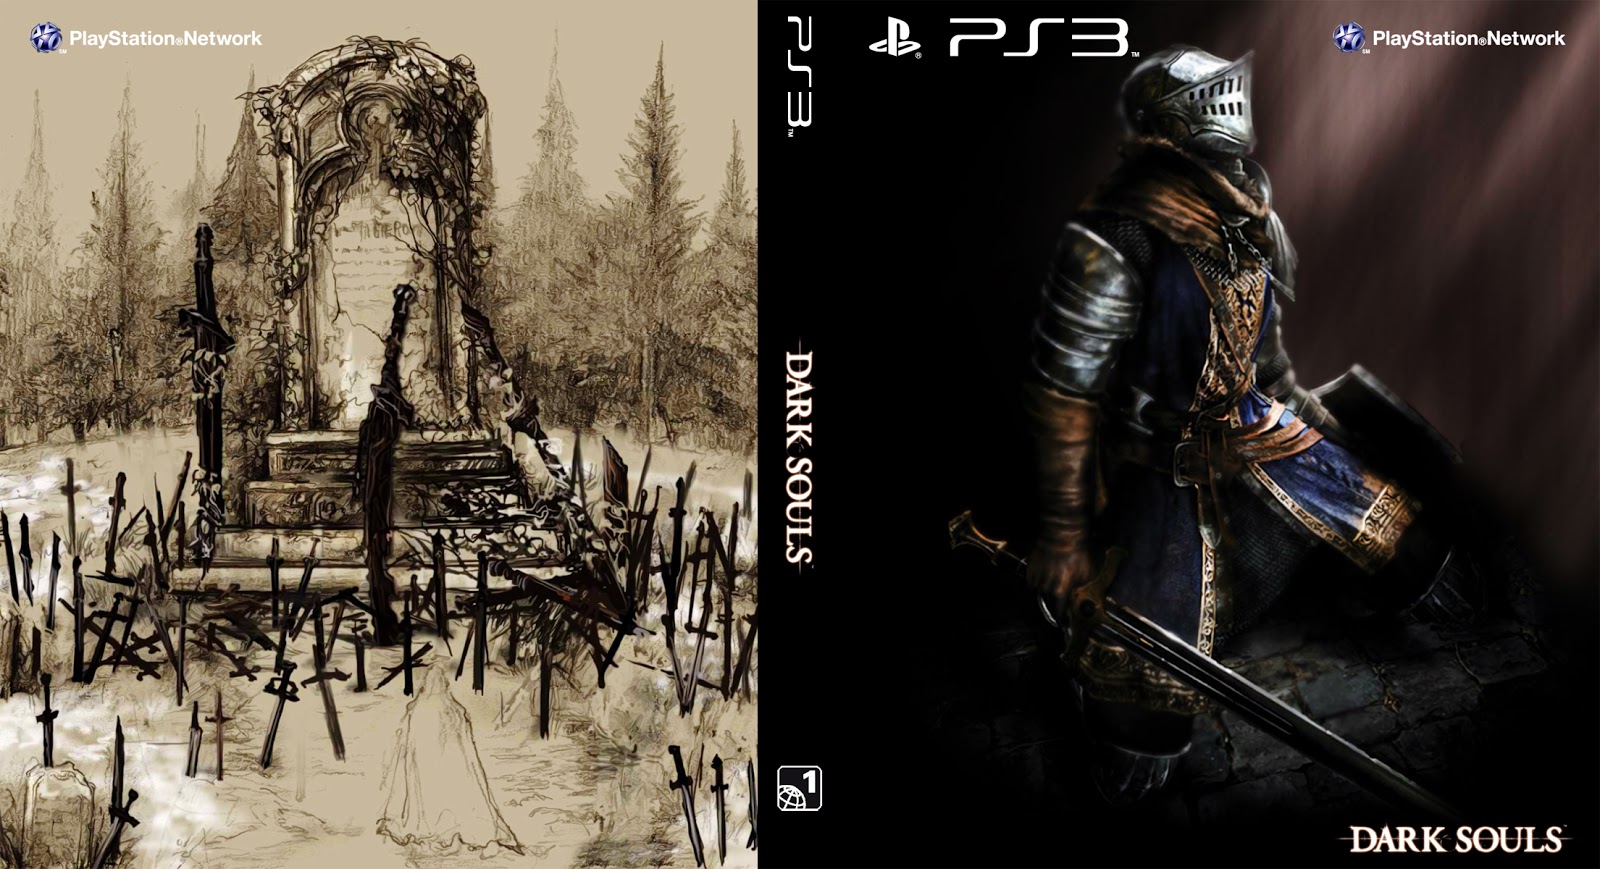 Amazoncom: Dark Souls III PC DVD: Video Games